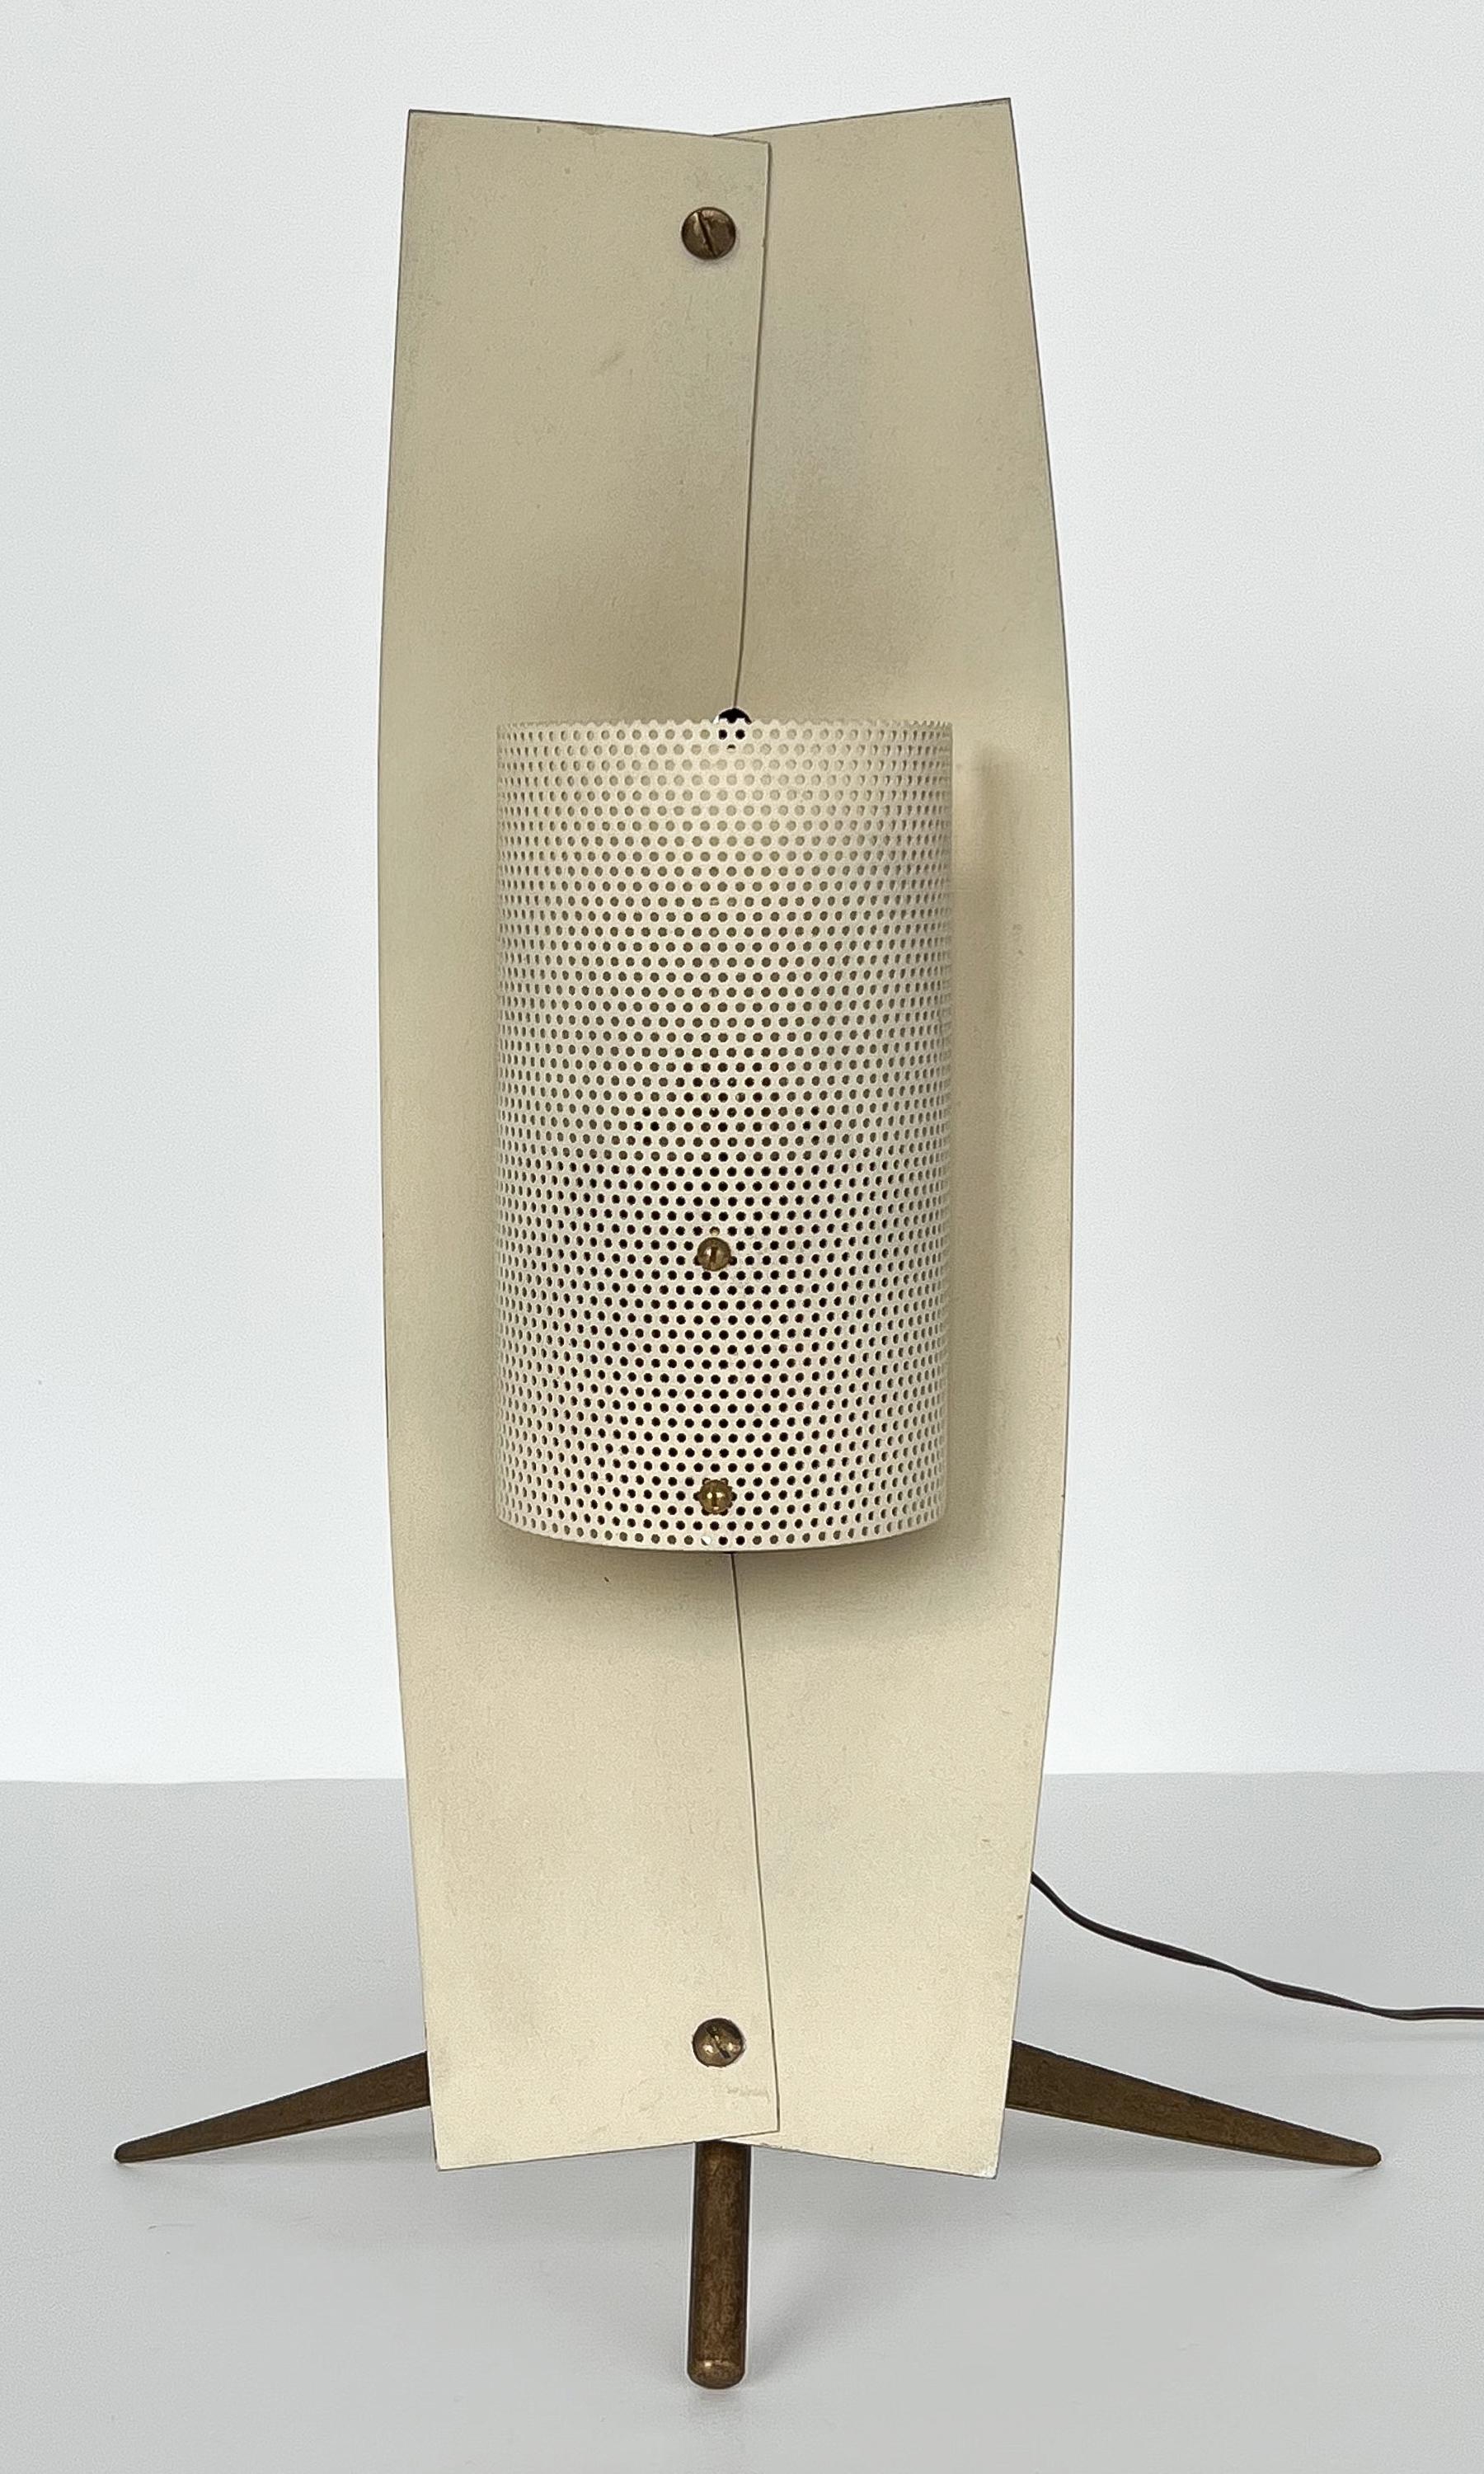 Enamel Pair Gastone Colliva Modernist Table Lamps / Wall Sconces